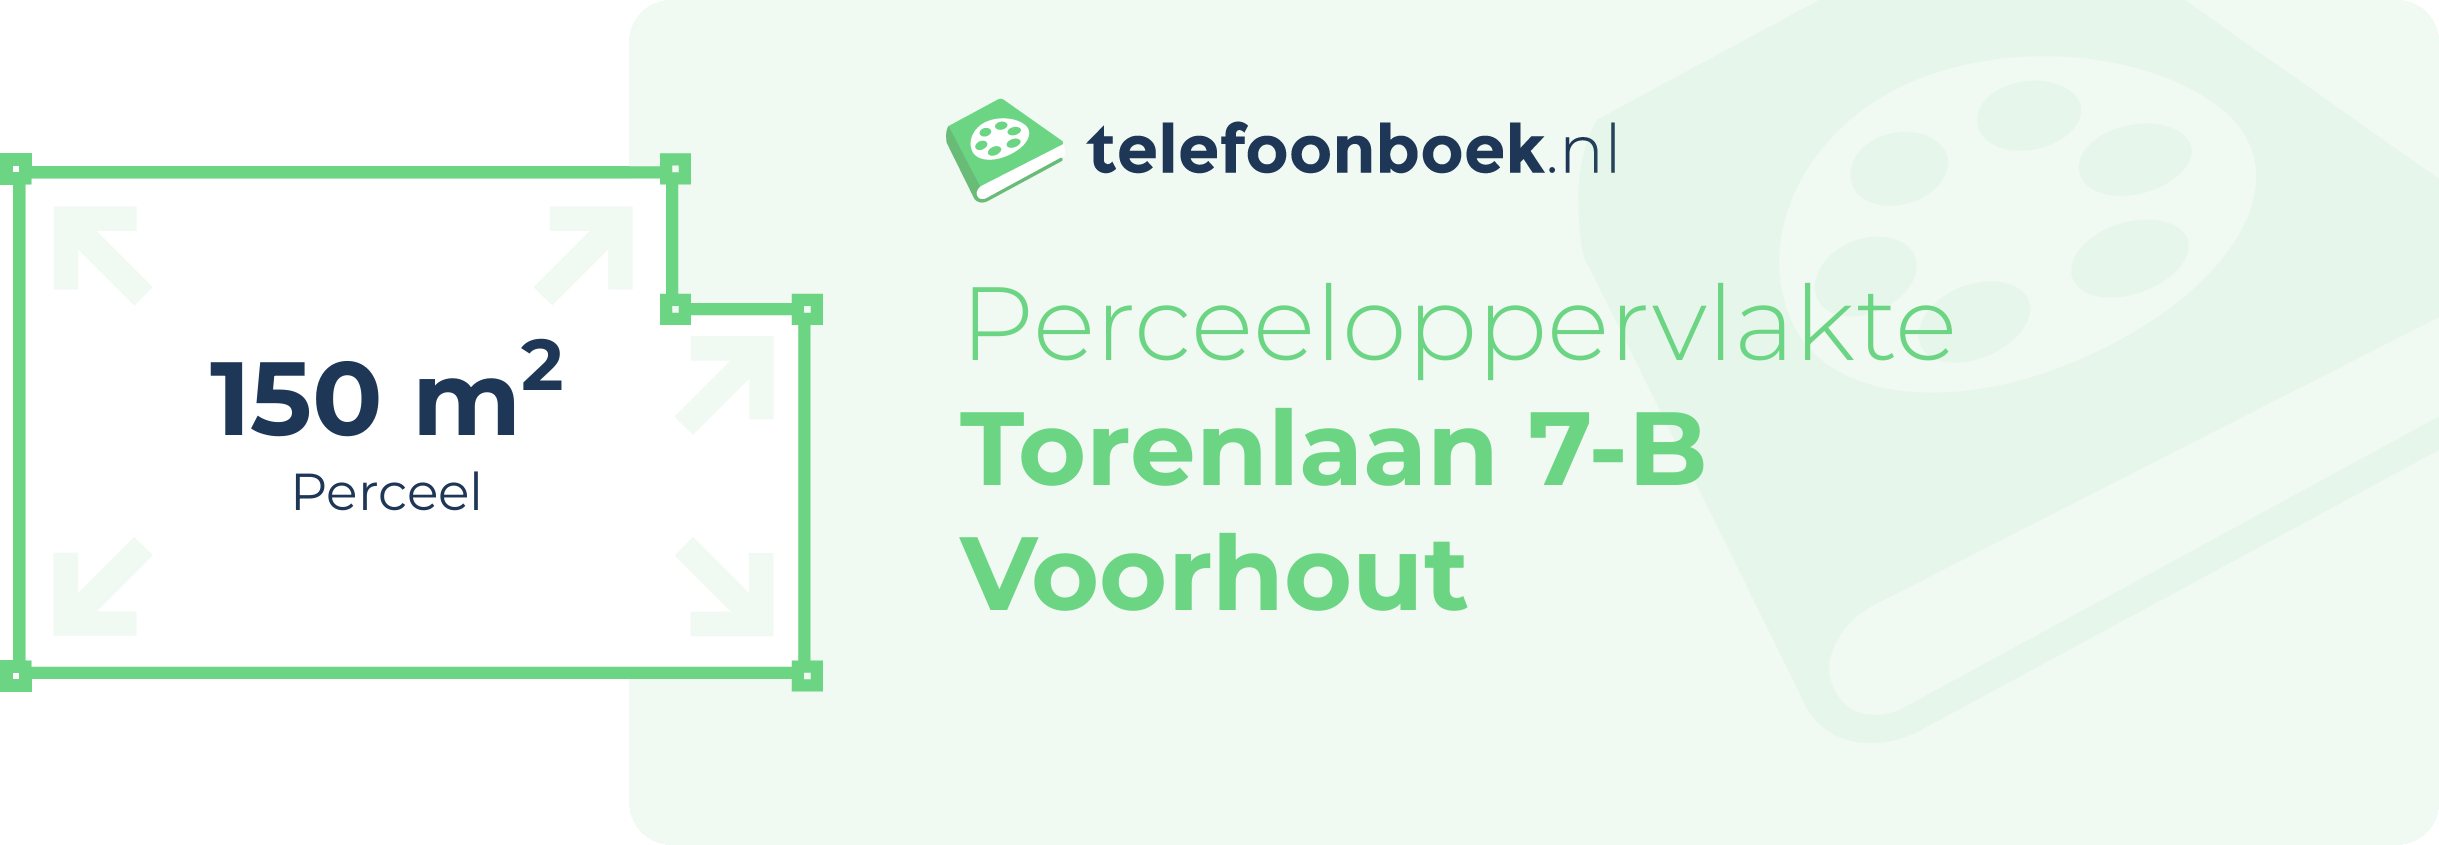 Perceeloppervlakte Torenlaan 7-B Voorhout